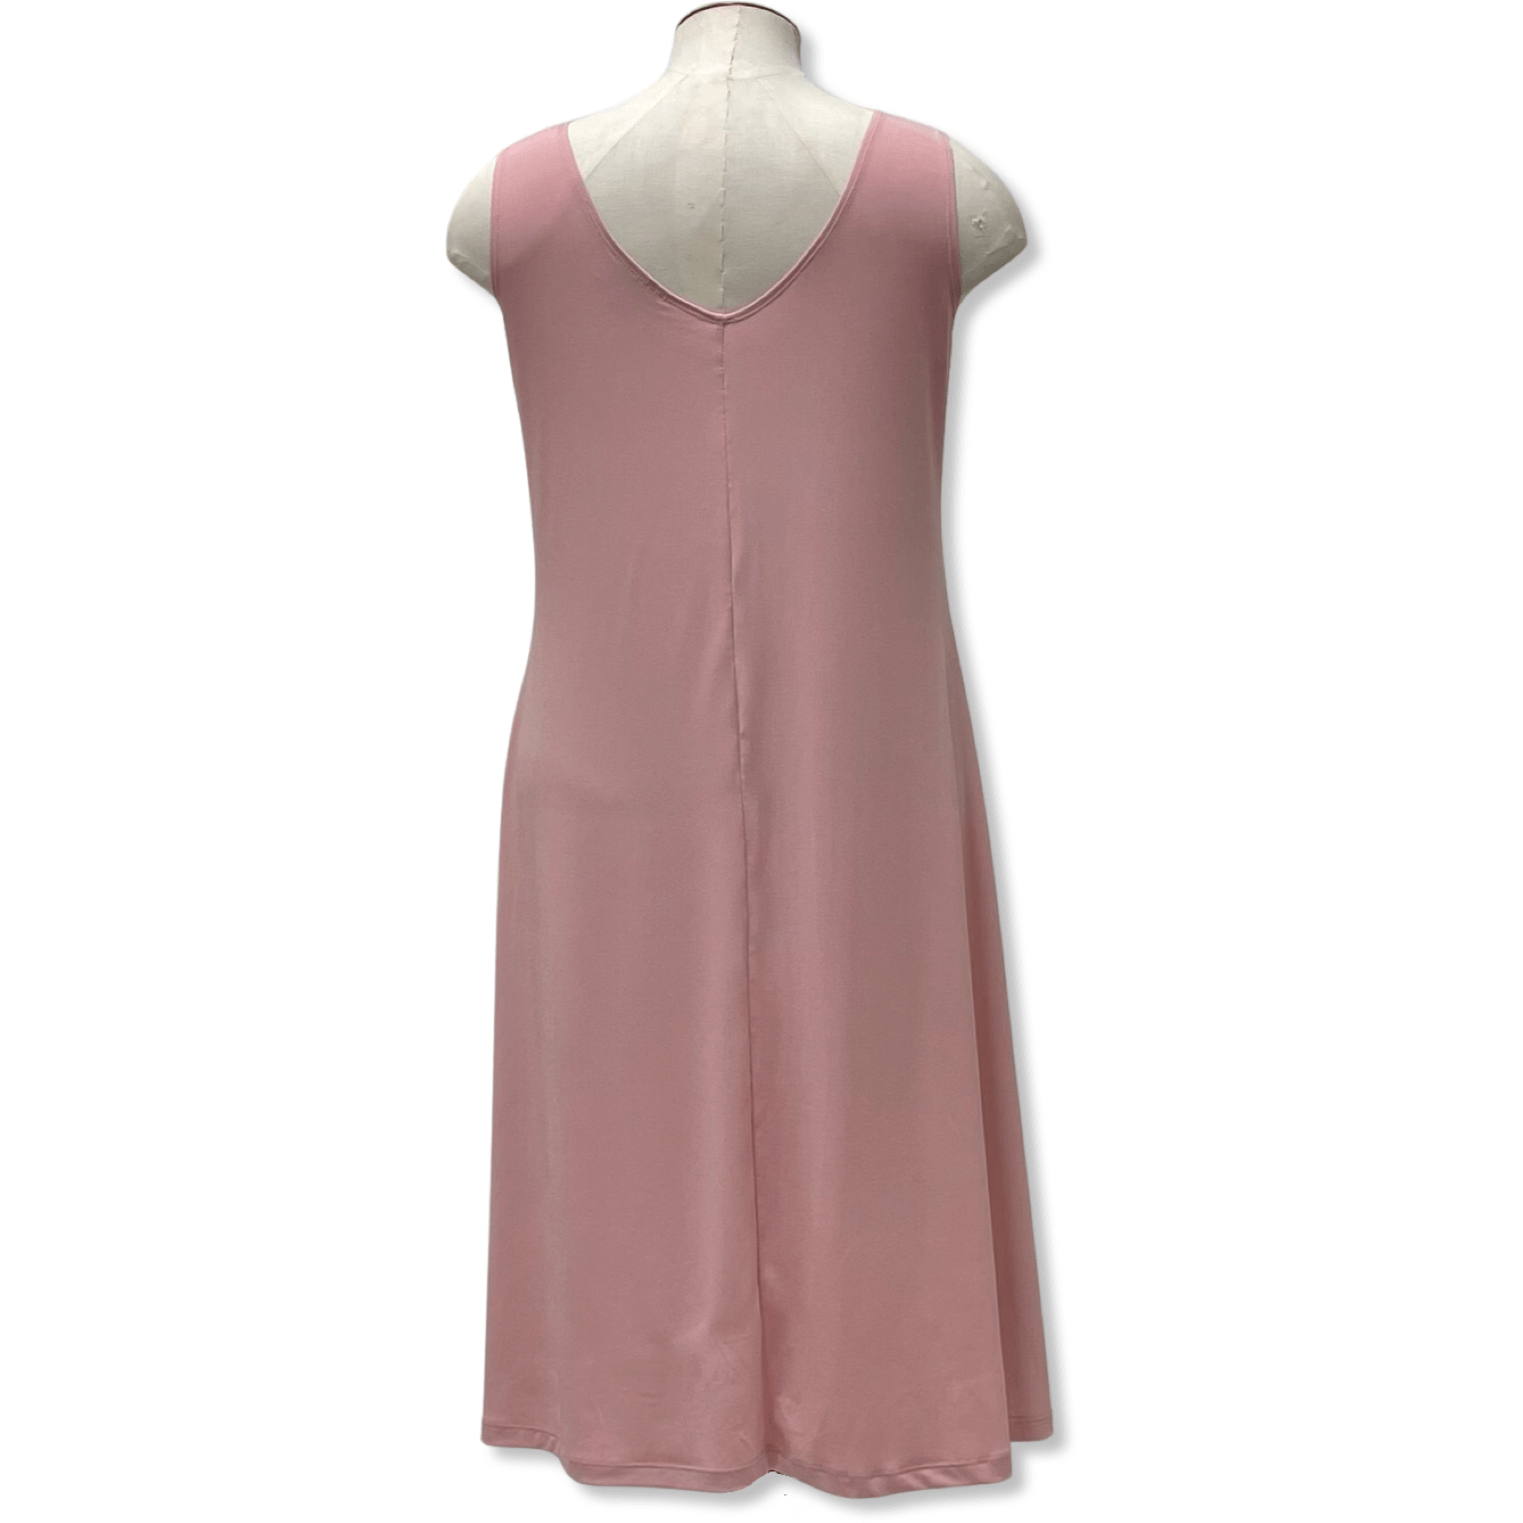 Bloom Clothing NZ,BASIC SLIP DRESS - Blush Pink,$169.00,